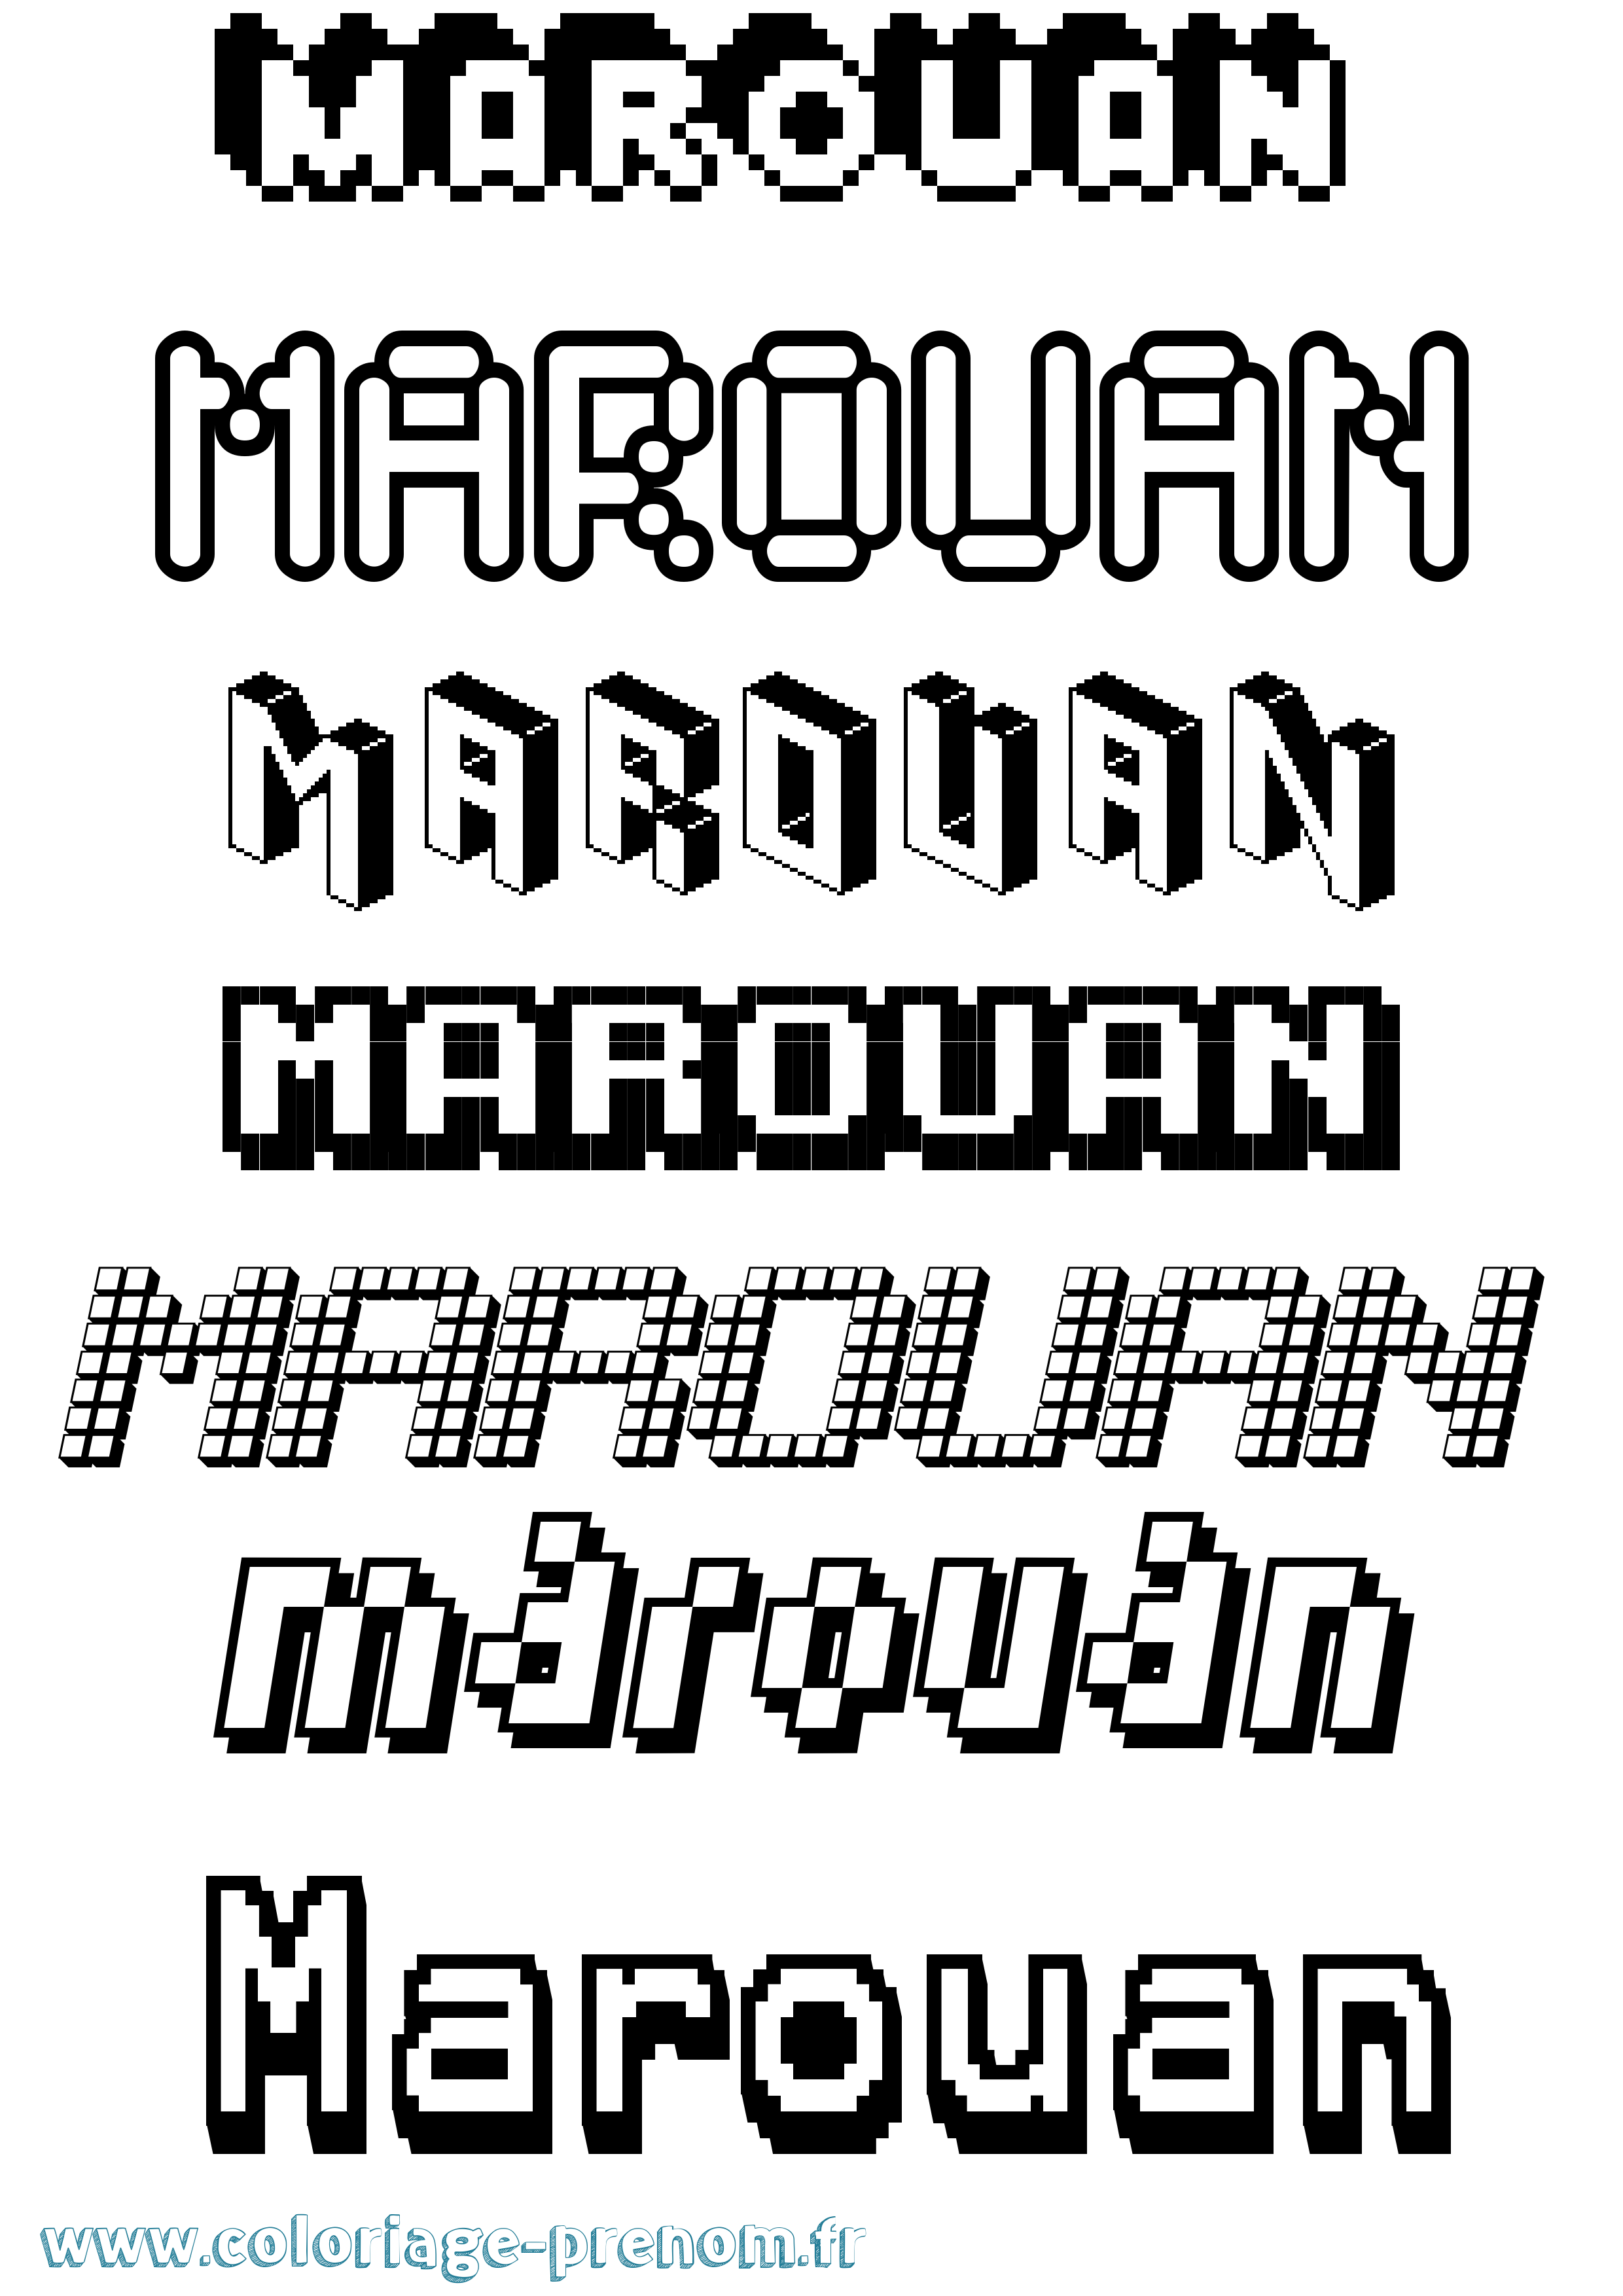 Coloriage prénom Marouan Pixel